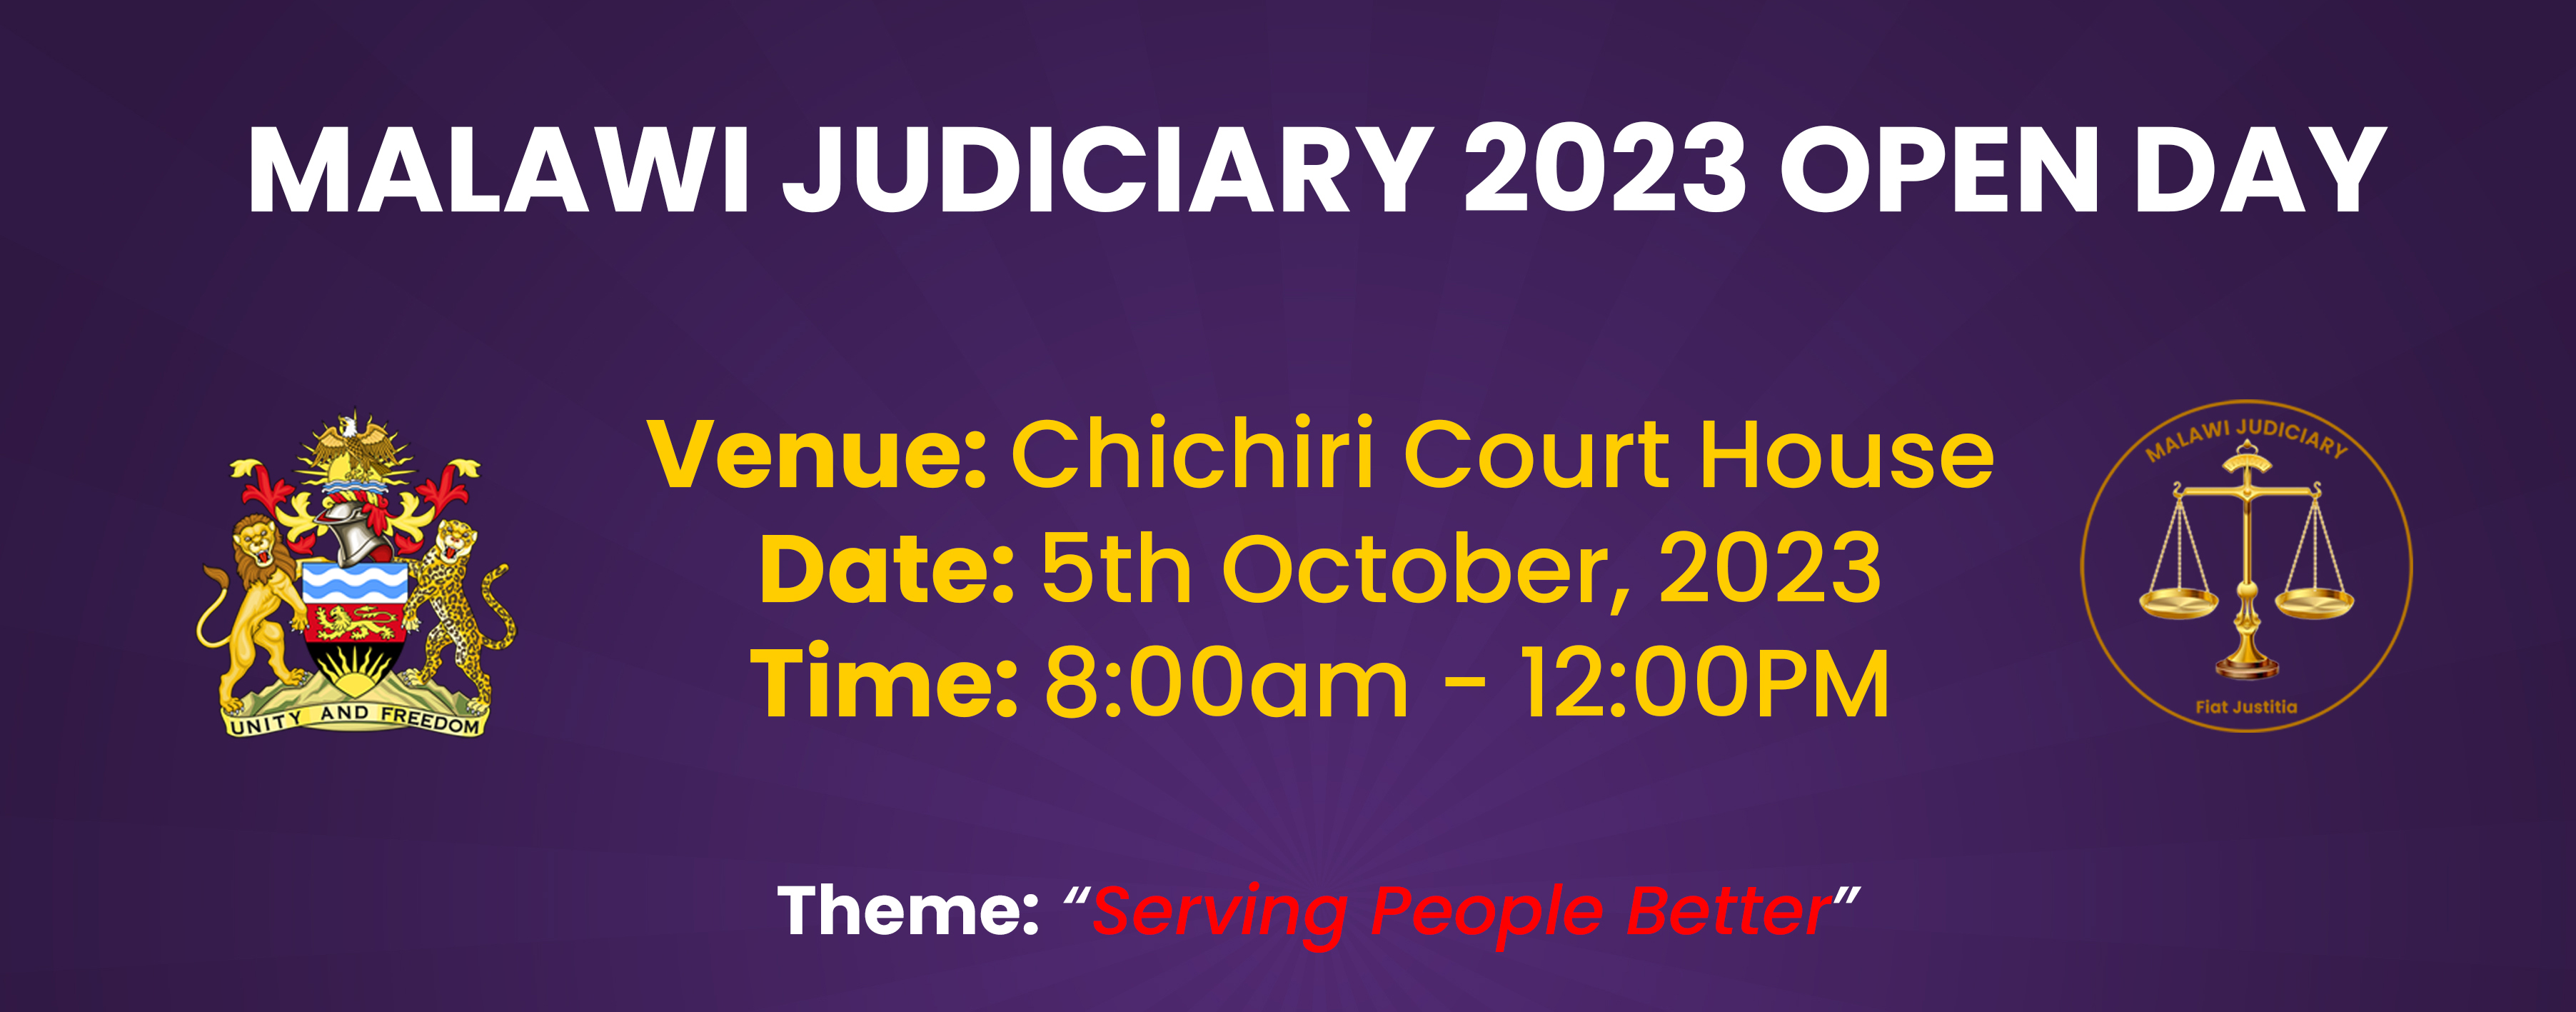 Malawi Judiciary 2023 Open Day